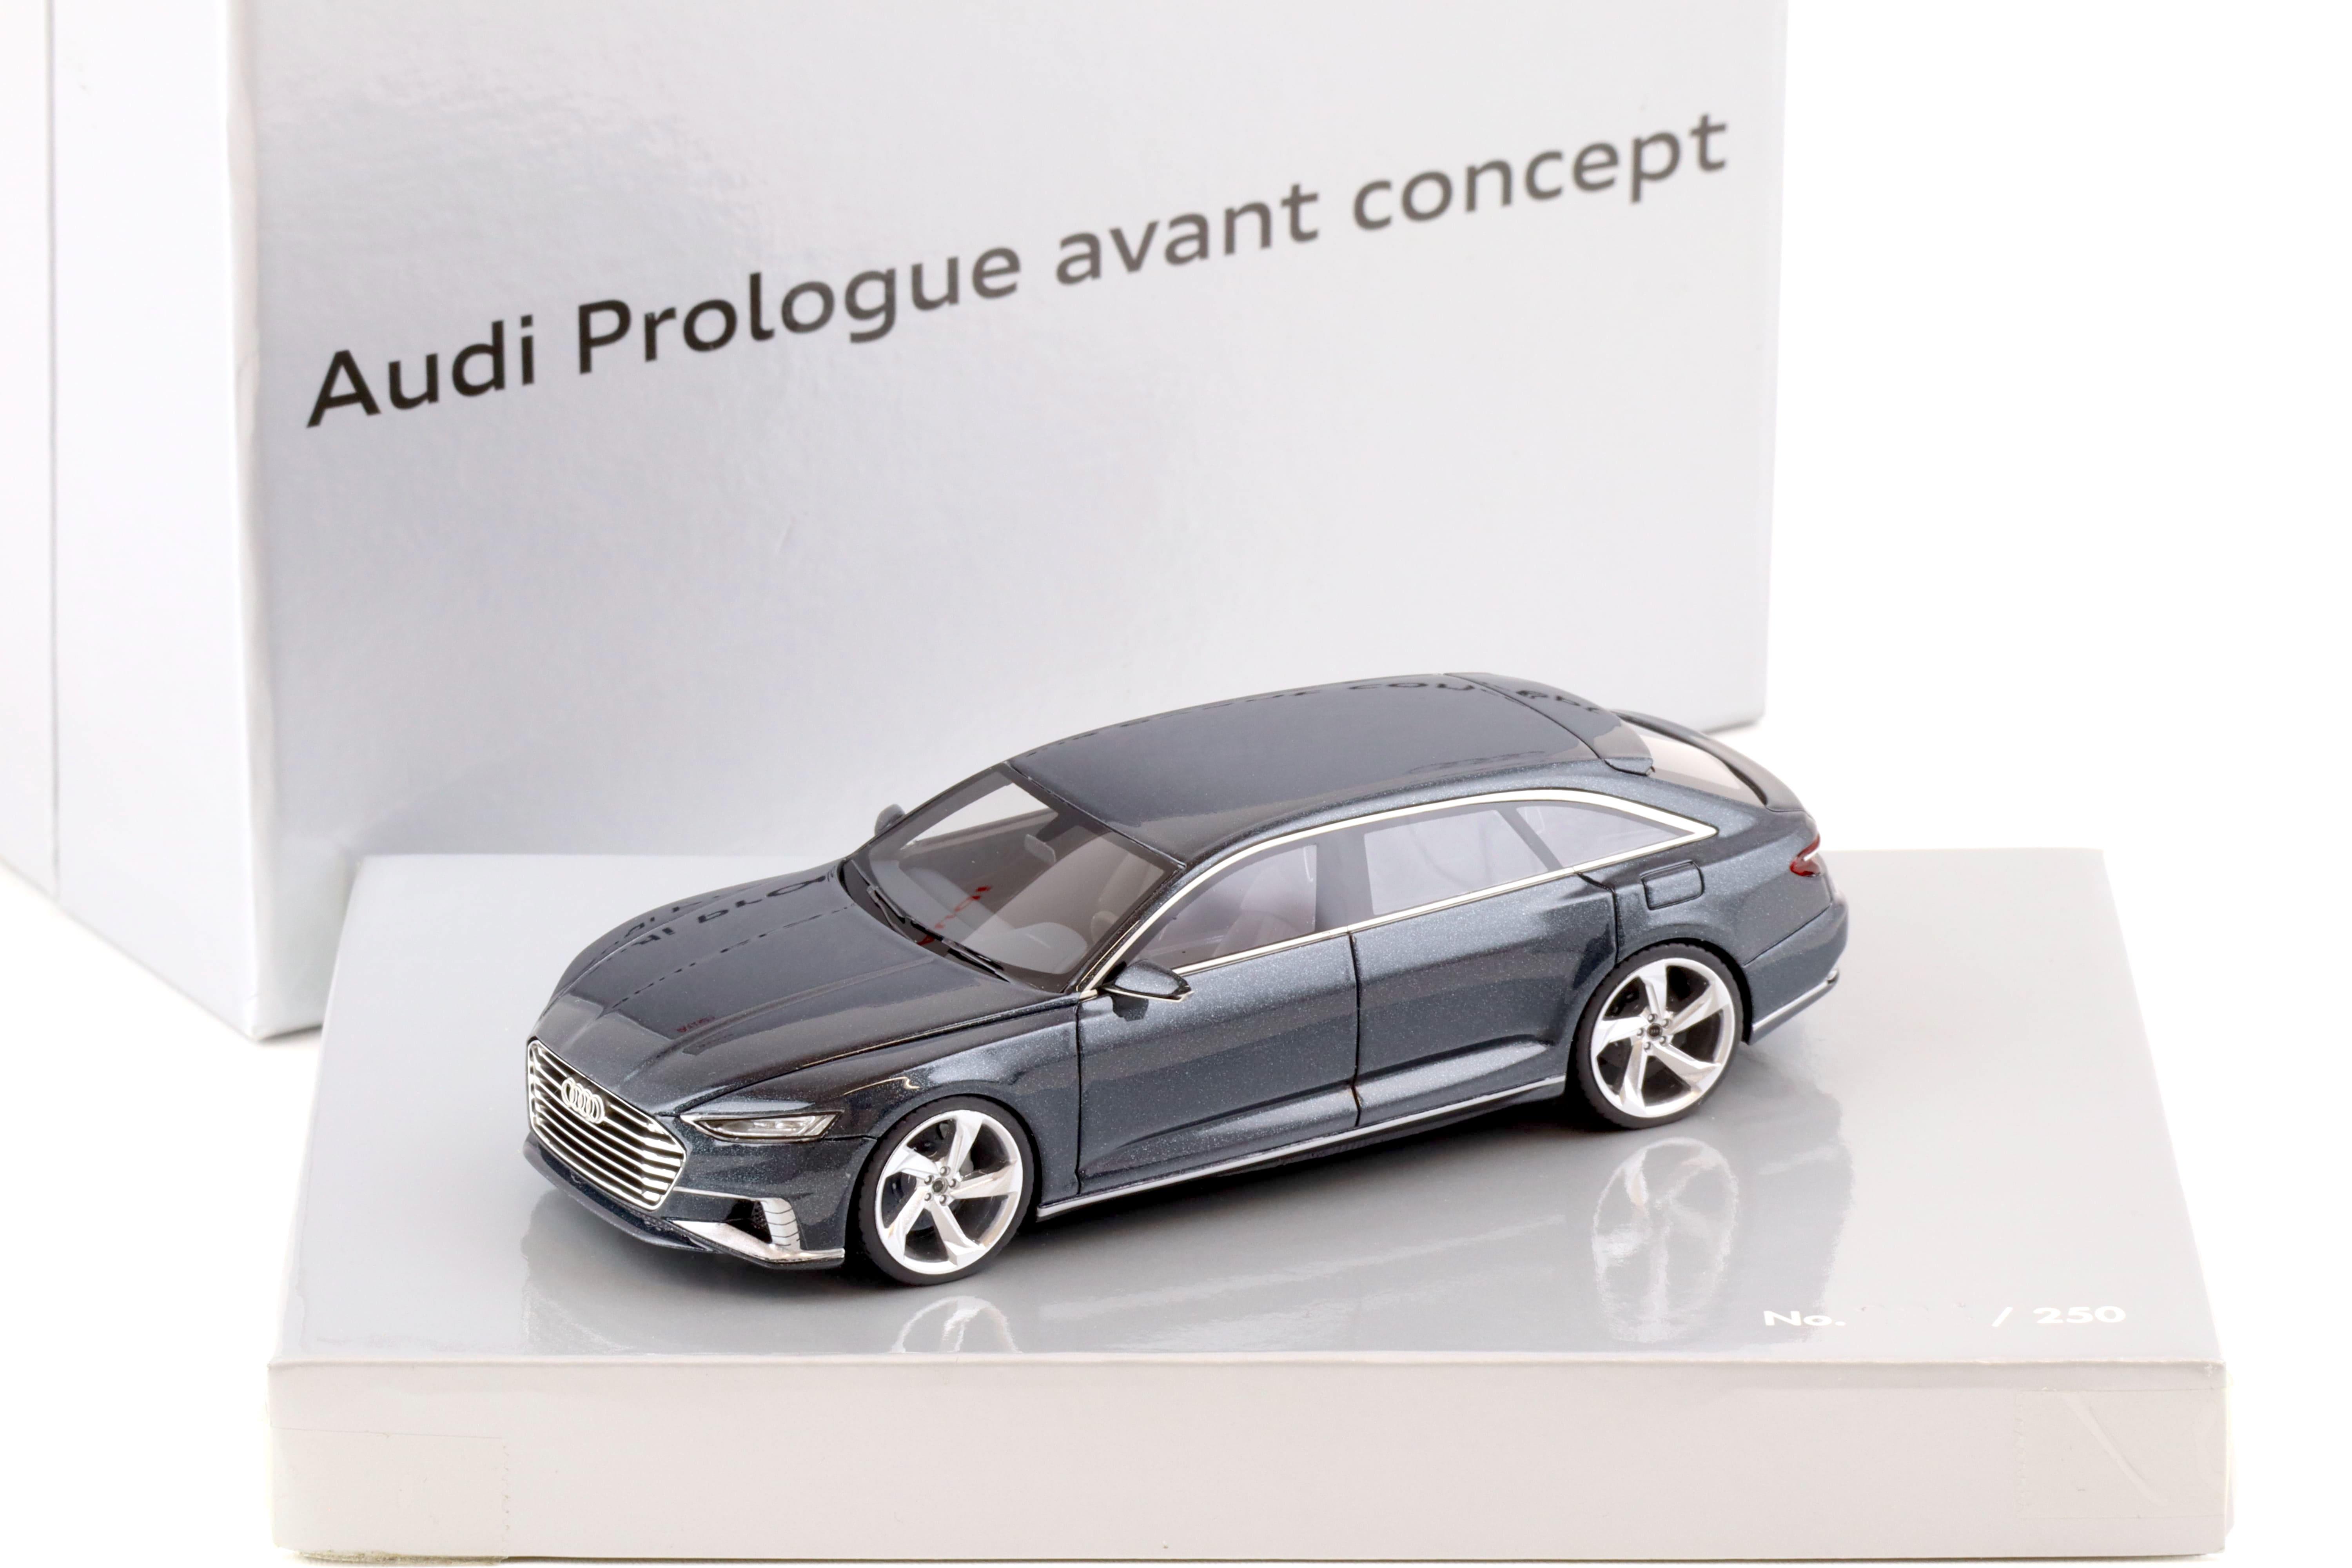 1:43 LookSmart Audi Prologue Avant Concept car dark grey DEALER VERSION